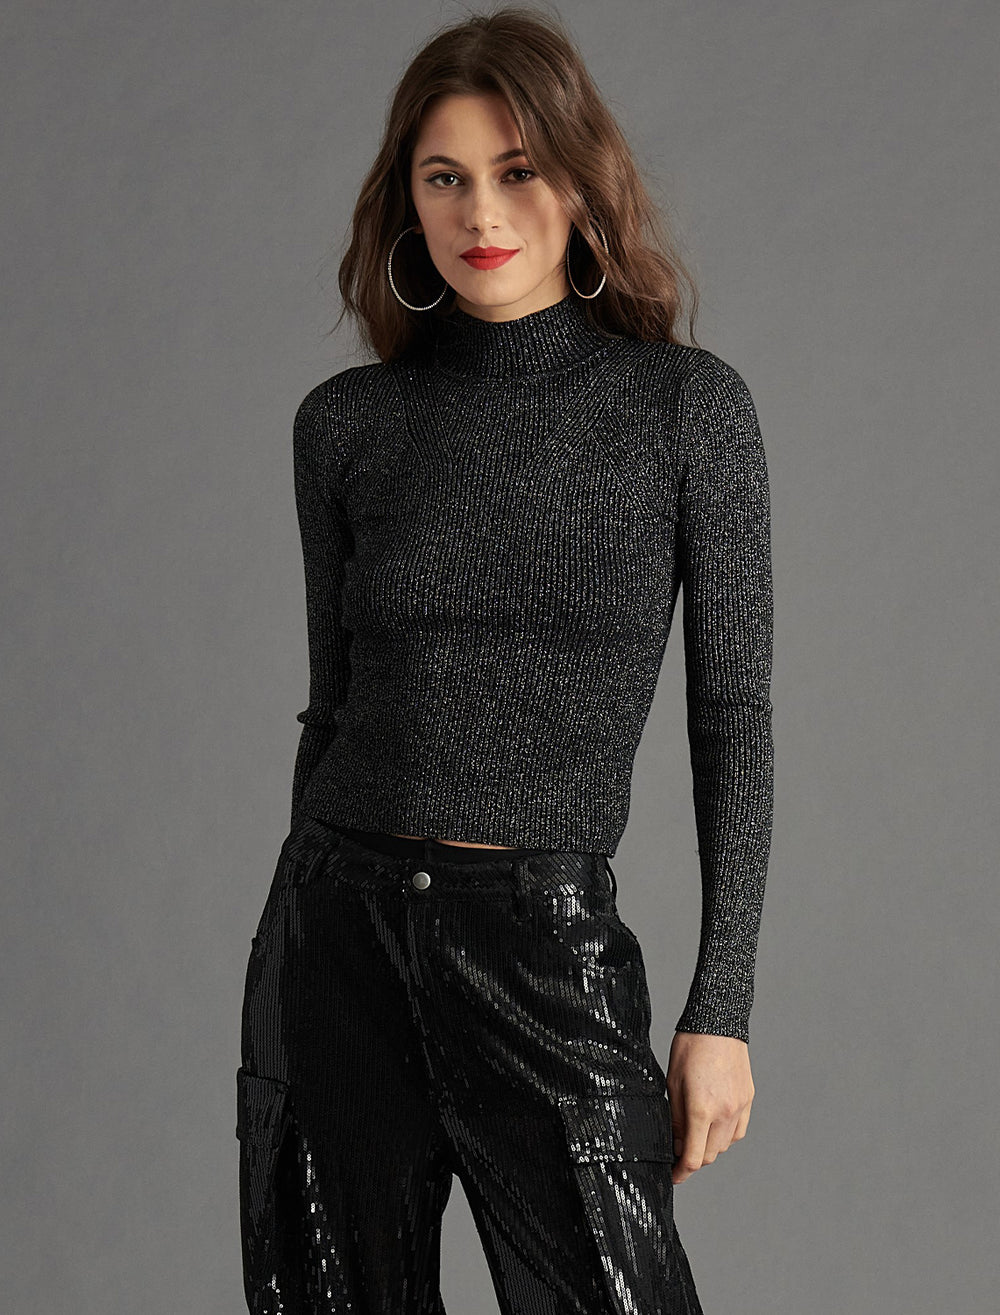 Model wearing Steve Madden's serita sweater in black.